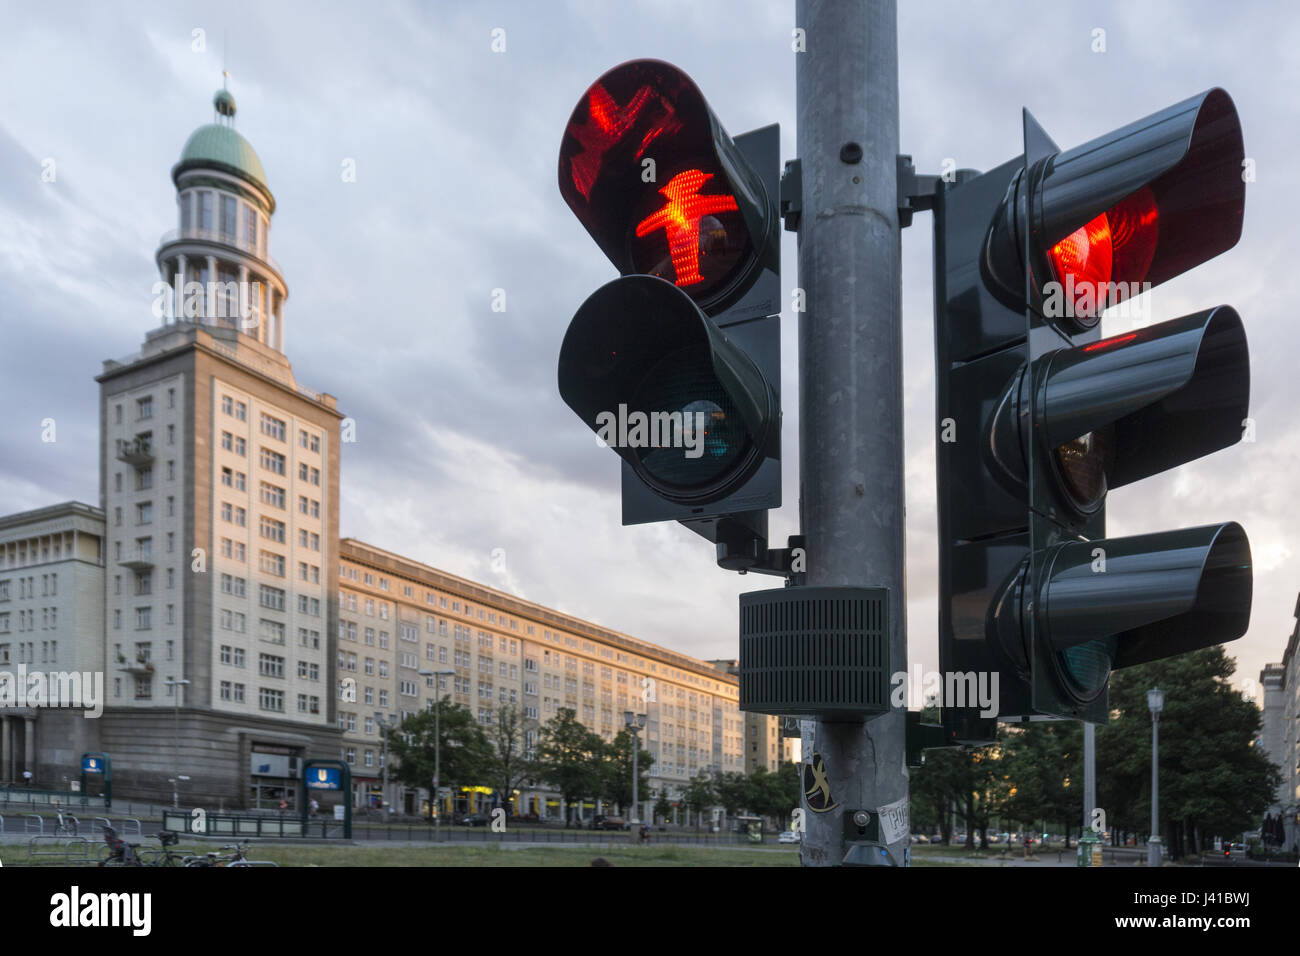 Feu de circulation montrant red man, Frankfurter Tor, Friedrichshain, Berlin, Allemagne Banque D'Images